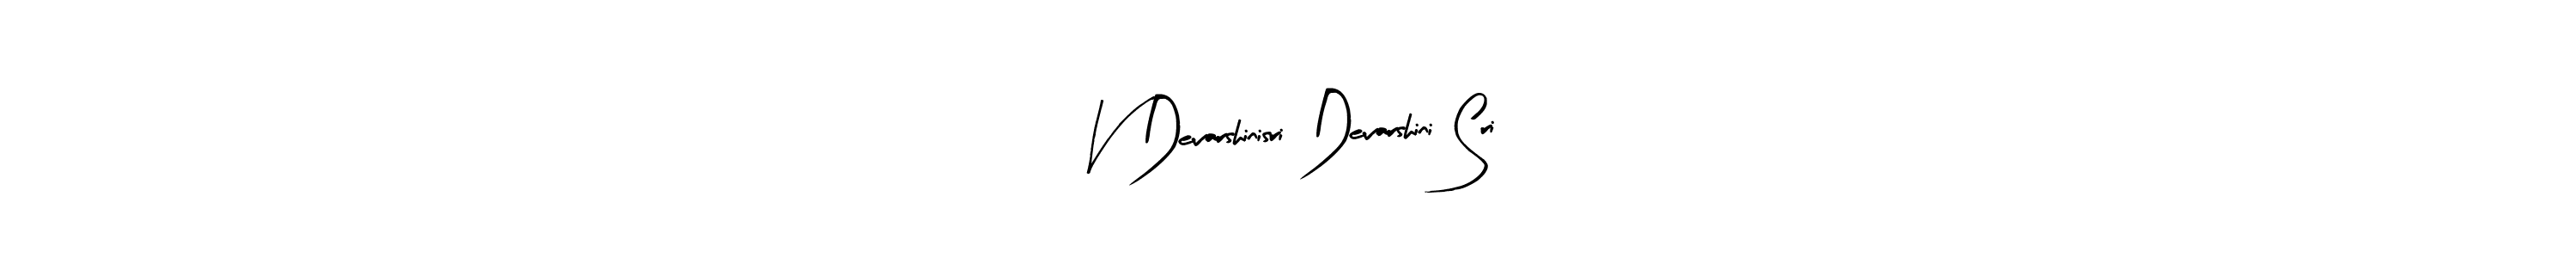 Use a signature maker to create a handwritten signature online. With this signature software, you can design (Arty Signature) your own signature for name V Devarshinisri Devarshini Sri. V Devarshinisri Devarshini Sri signature style 8 images and pictures png